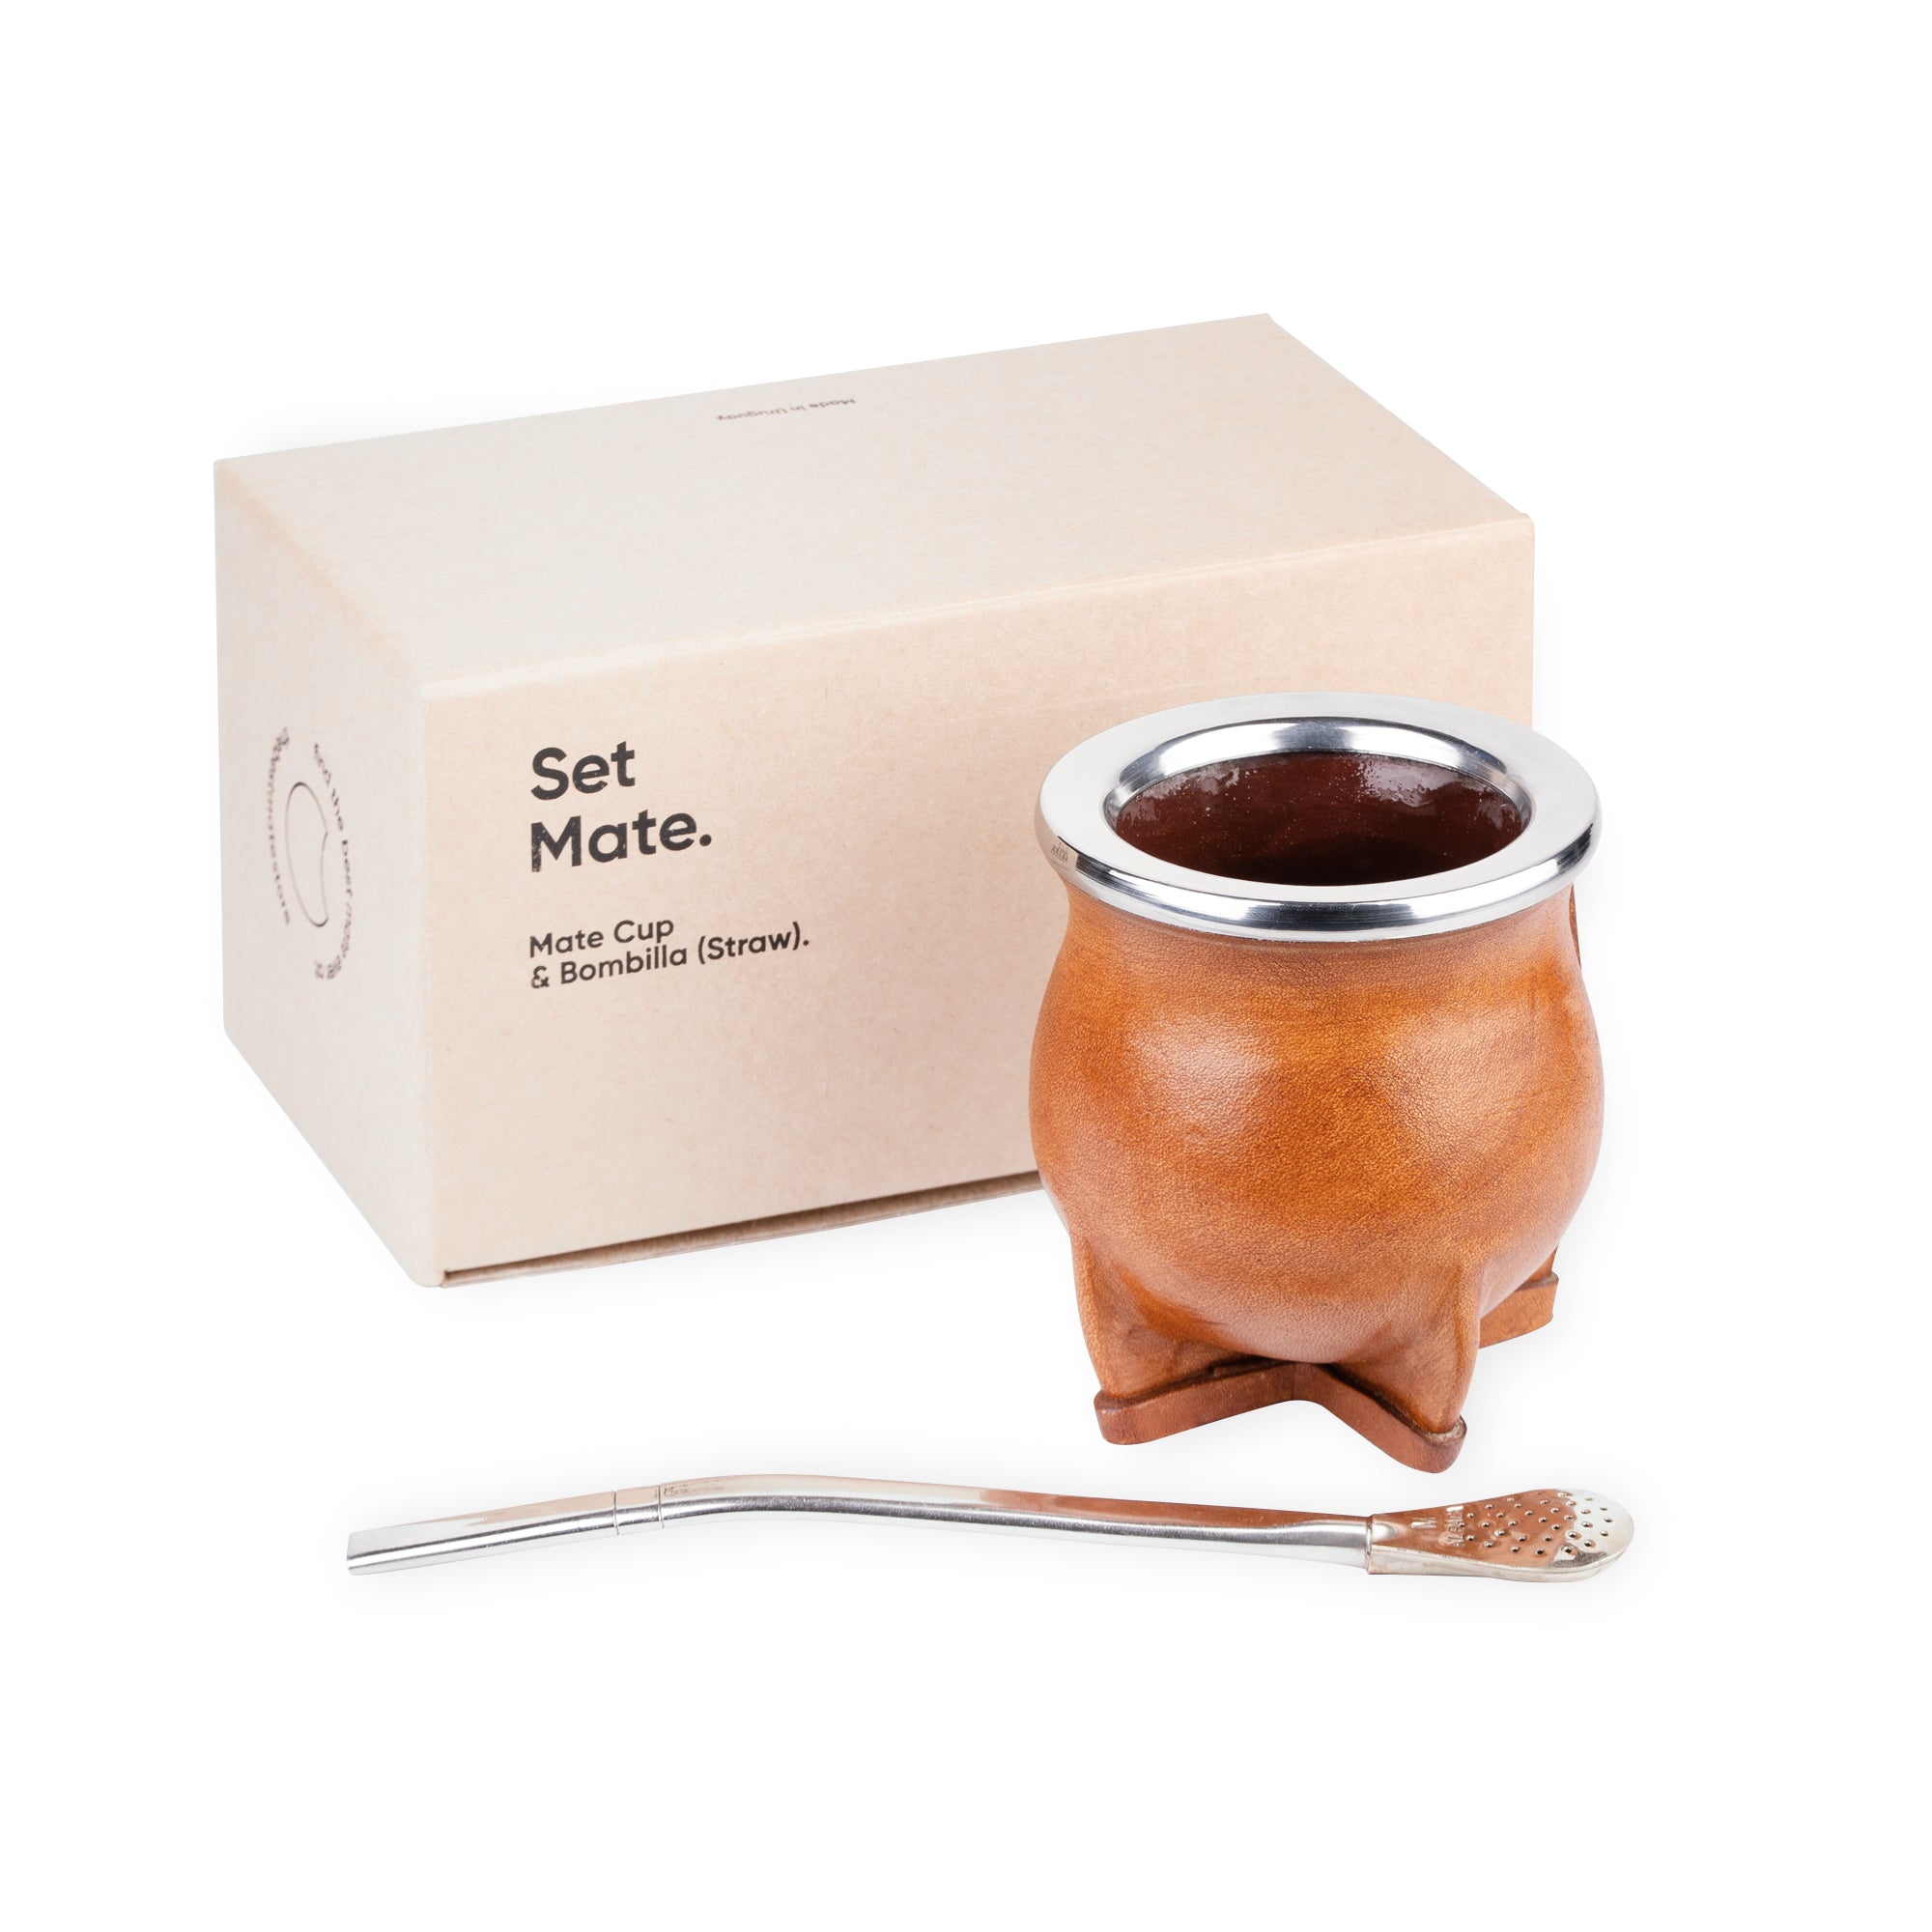 BALIBETOV Yerba Mate Gourd Set (Original Natural Handmade Yerba Mate Cup  Argentina) - Includes Mate Tea Cup, Bombilla (Yerba Mate Straw) and Clean